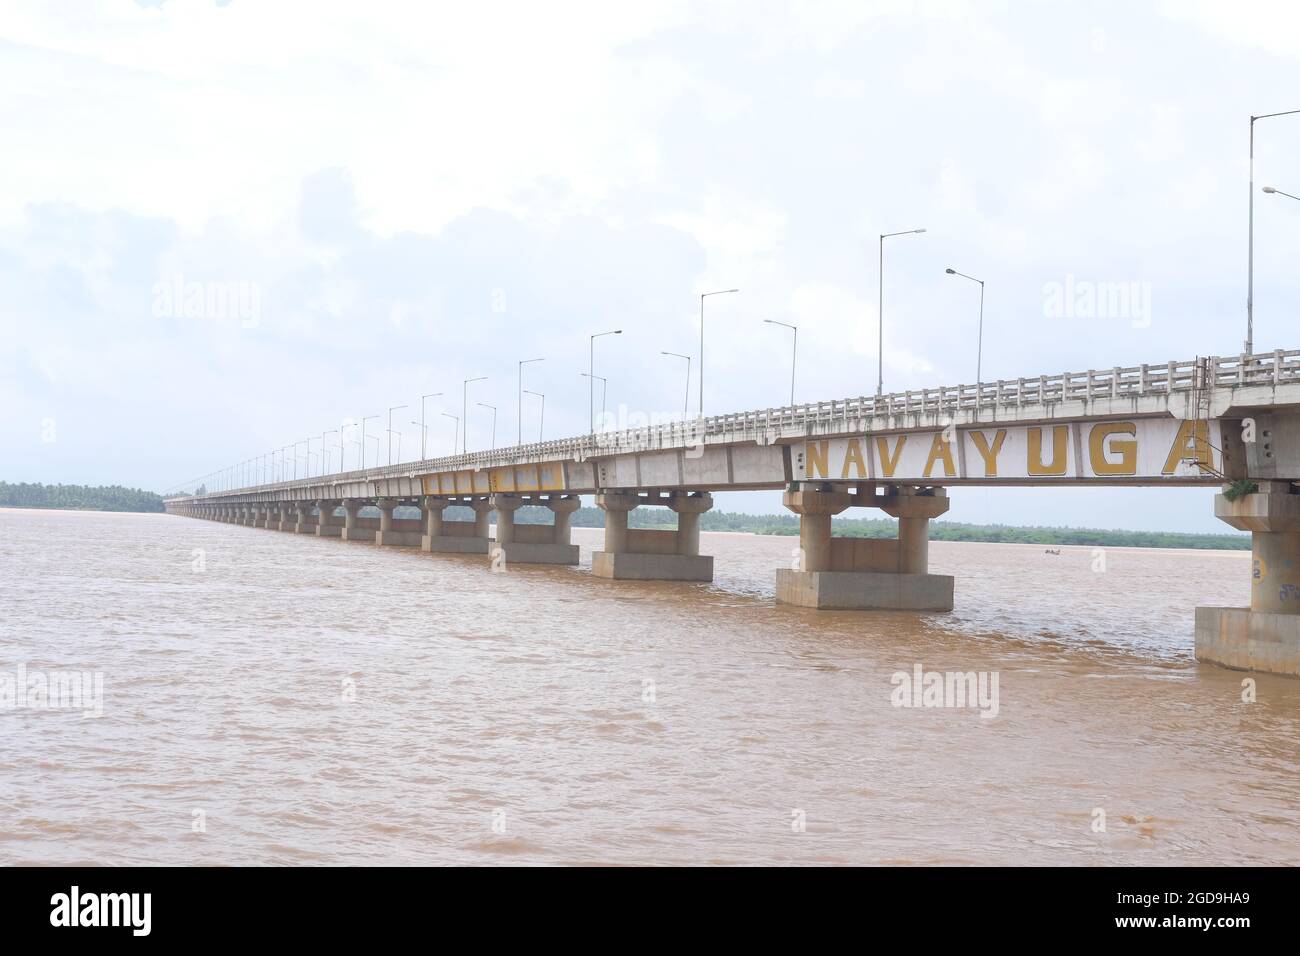 Bridge across River of south india Stock Photo